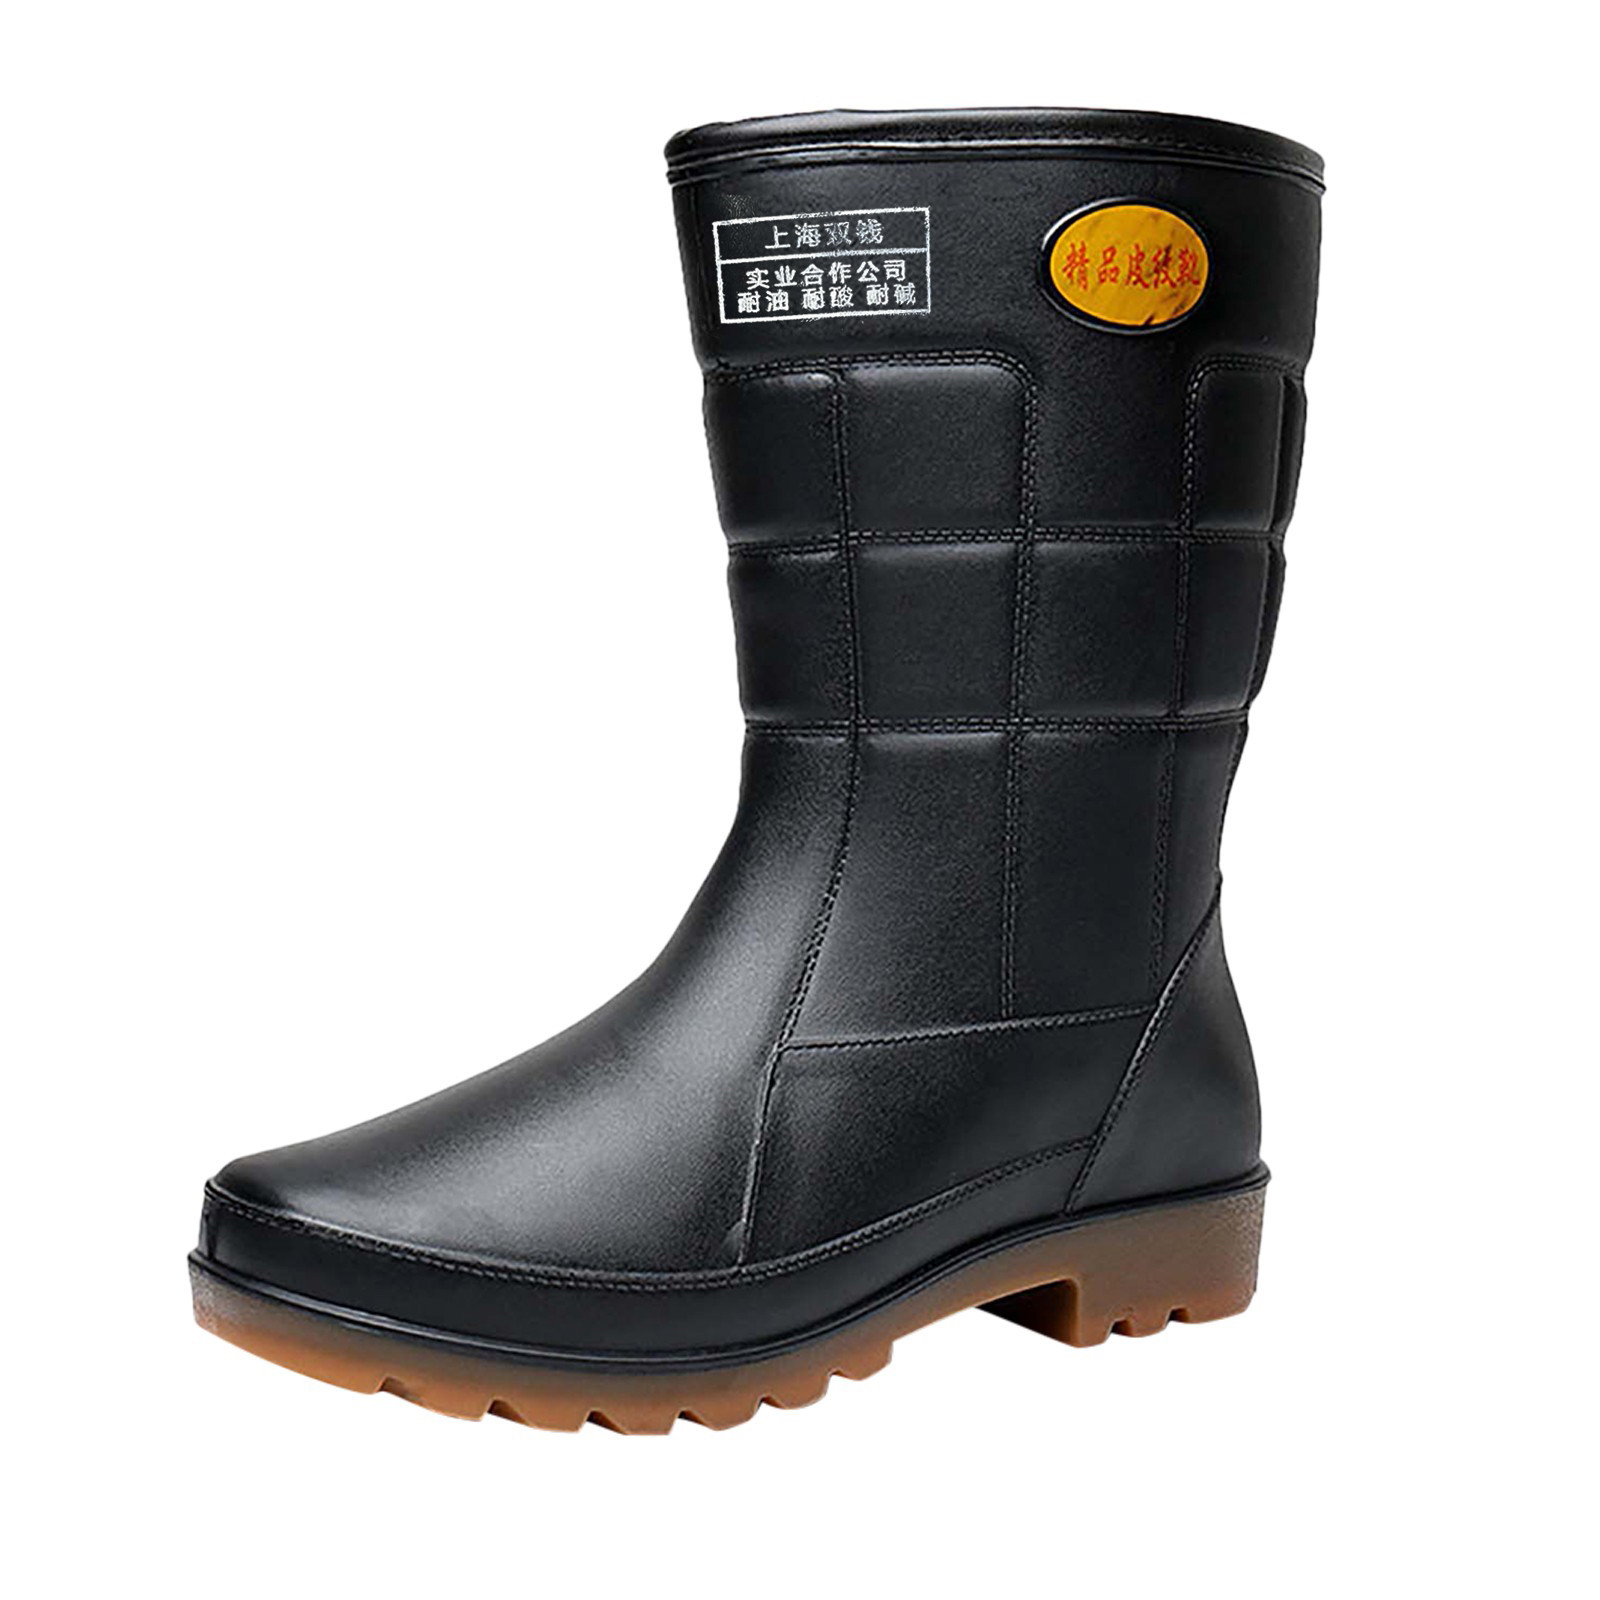 PMUYBHF Mens Boots Black Men Mid Calf Rain Boots Waterproof Anti Slip ...